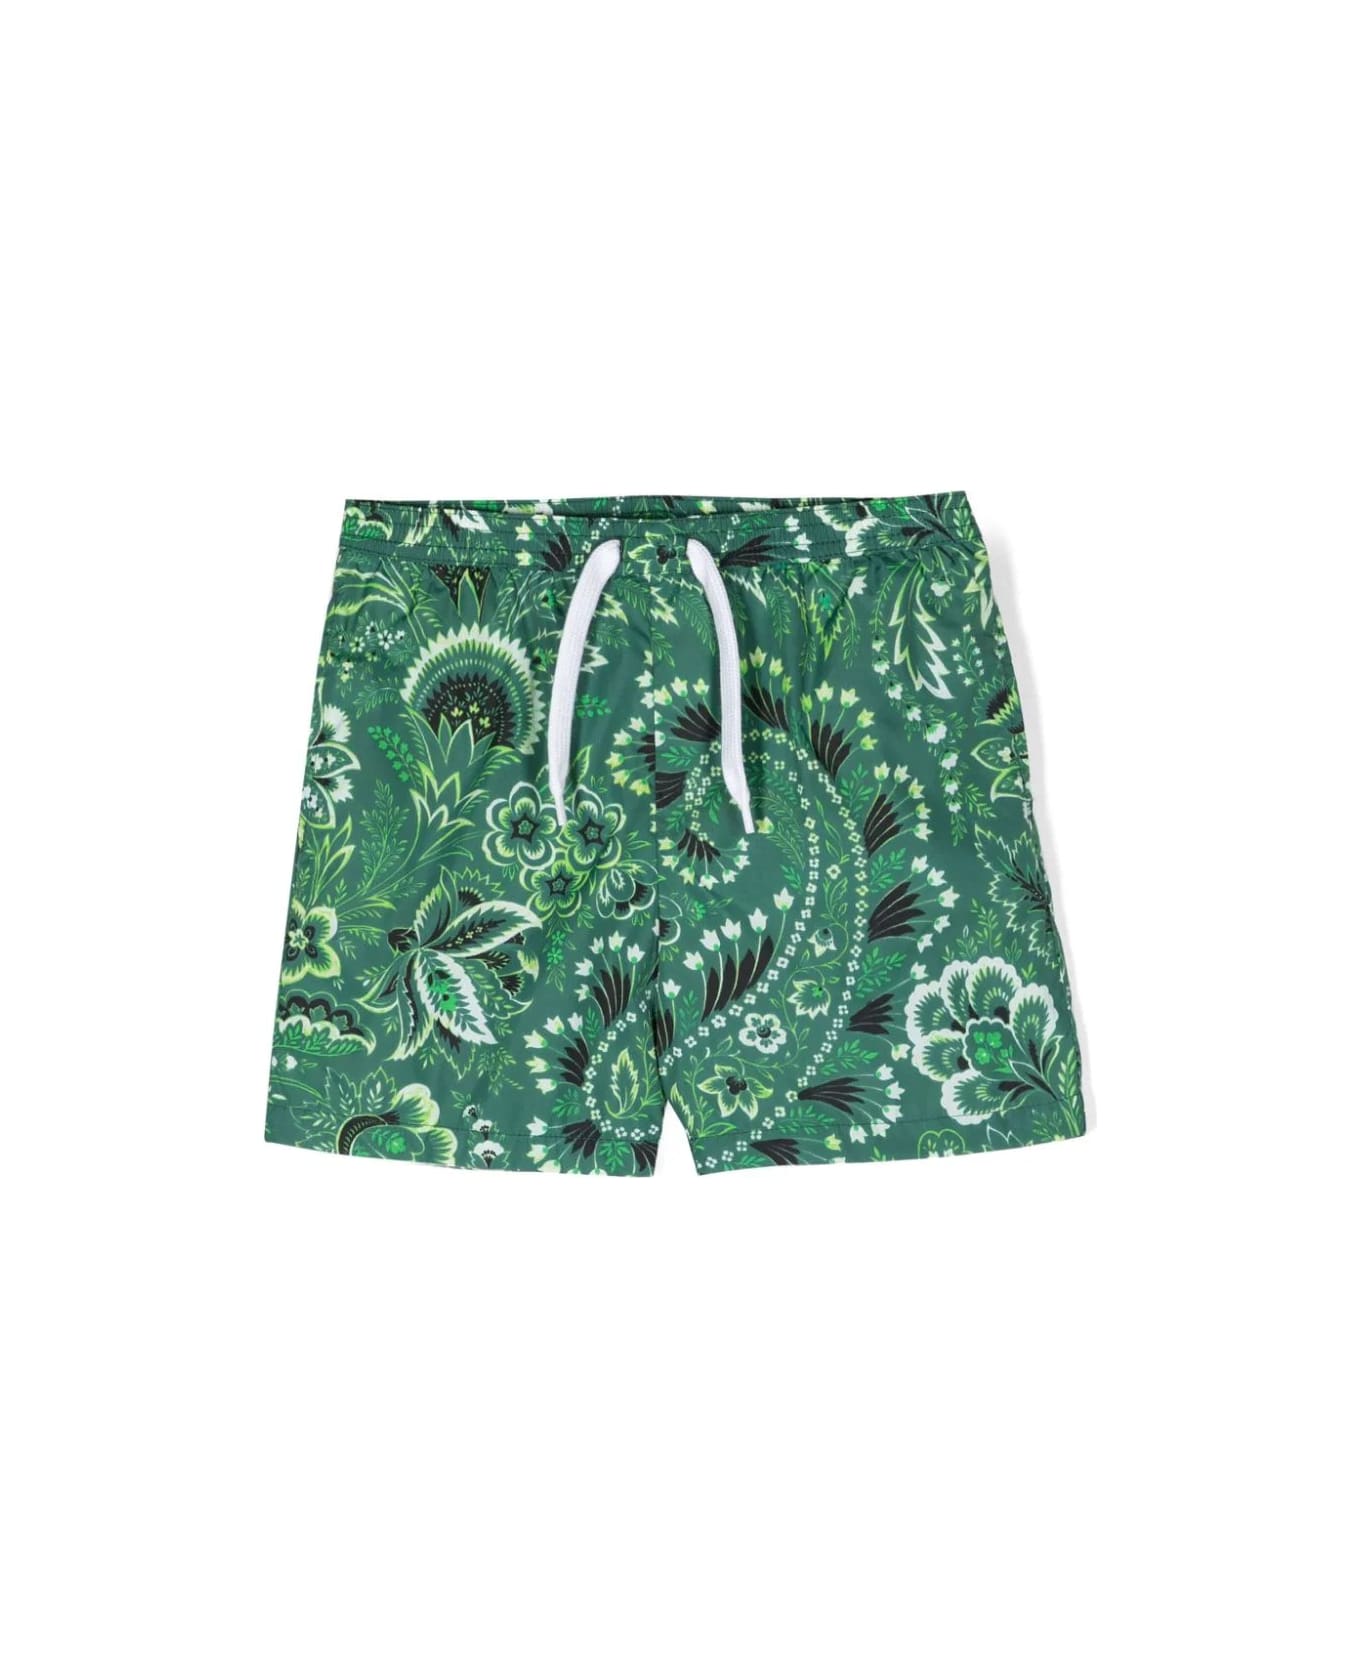 Etro Green Swim Shorts With Paisley Motif - Green